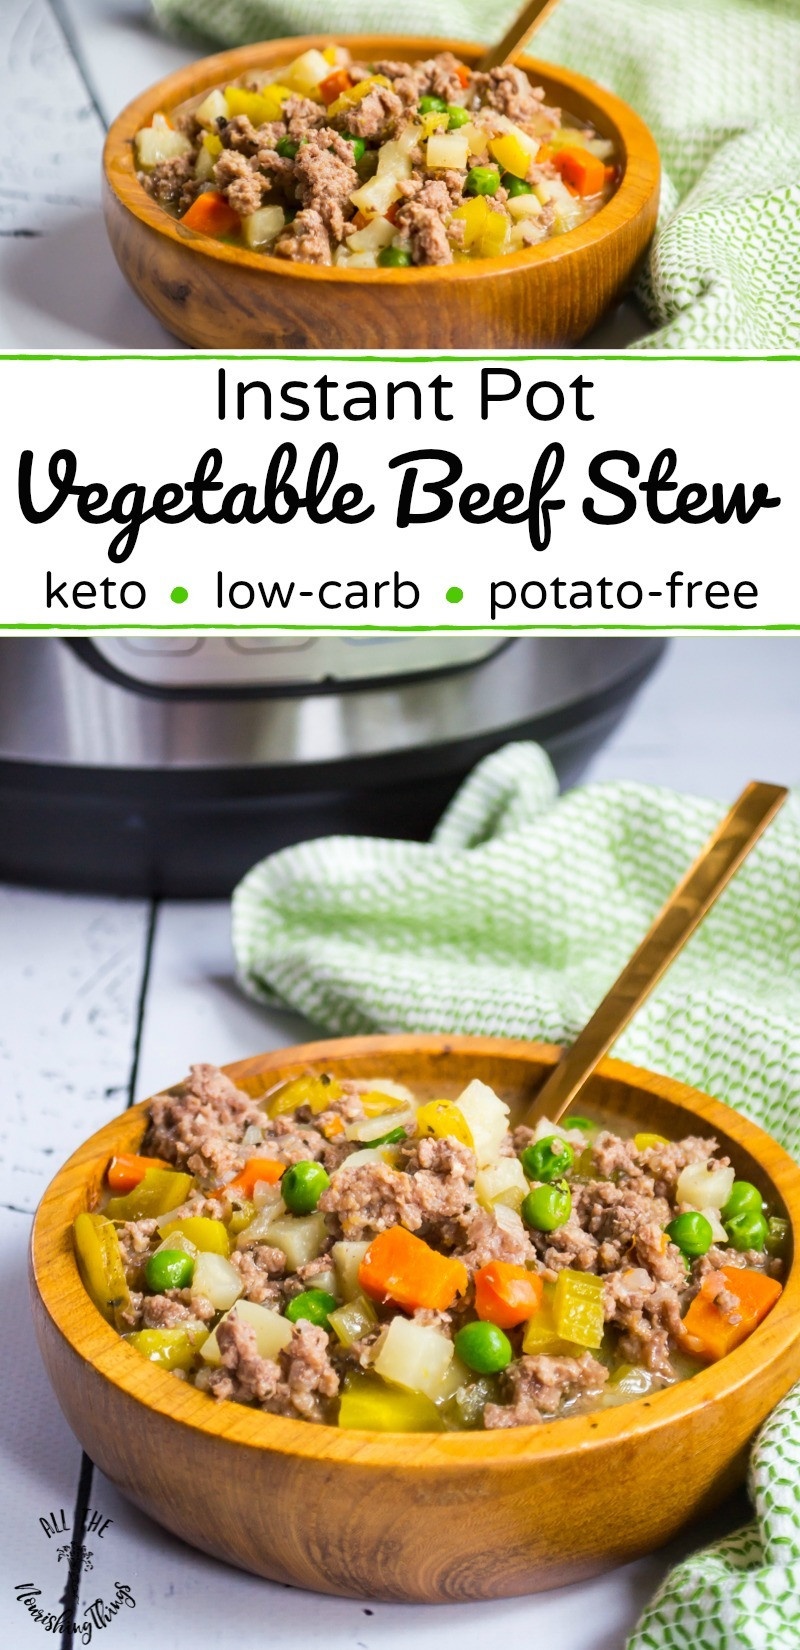 Instant Pot Keto Stew
 Instant Pot Ve able Beef Stew keto Whole30 potato free